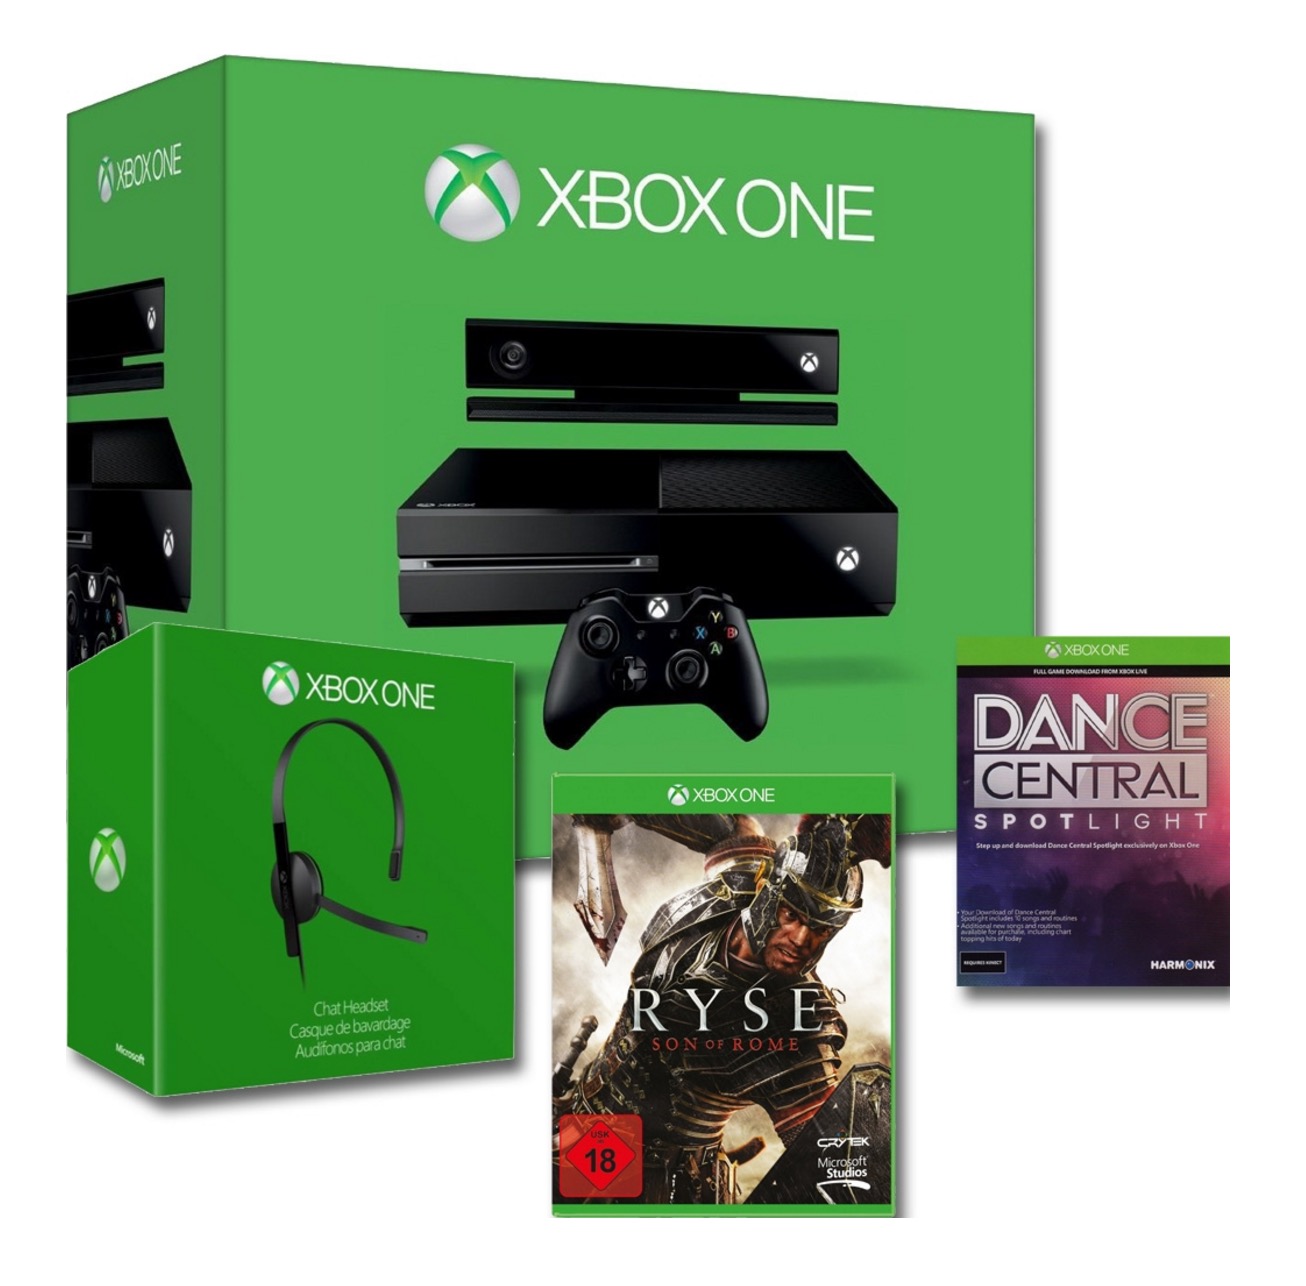 Microsoft Xbox One 500GB + Kinect + Ryse + Dance & Central + Headset “refurbished” nur 169,66 Euro inkl. Versand